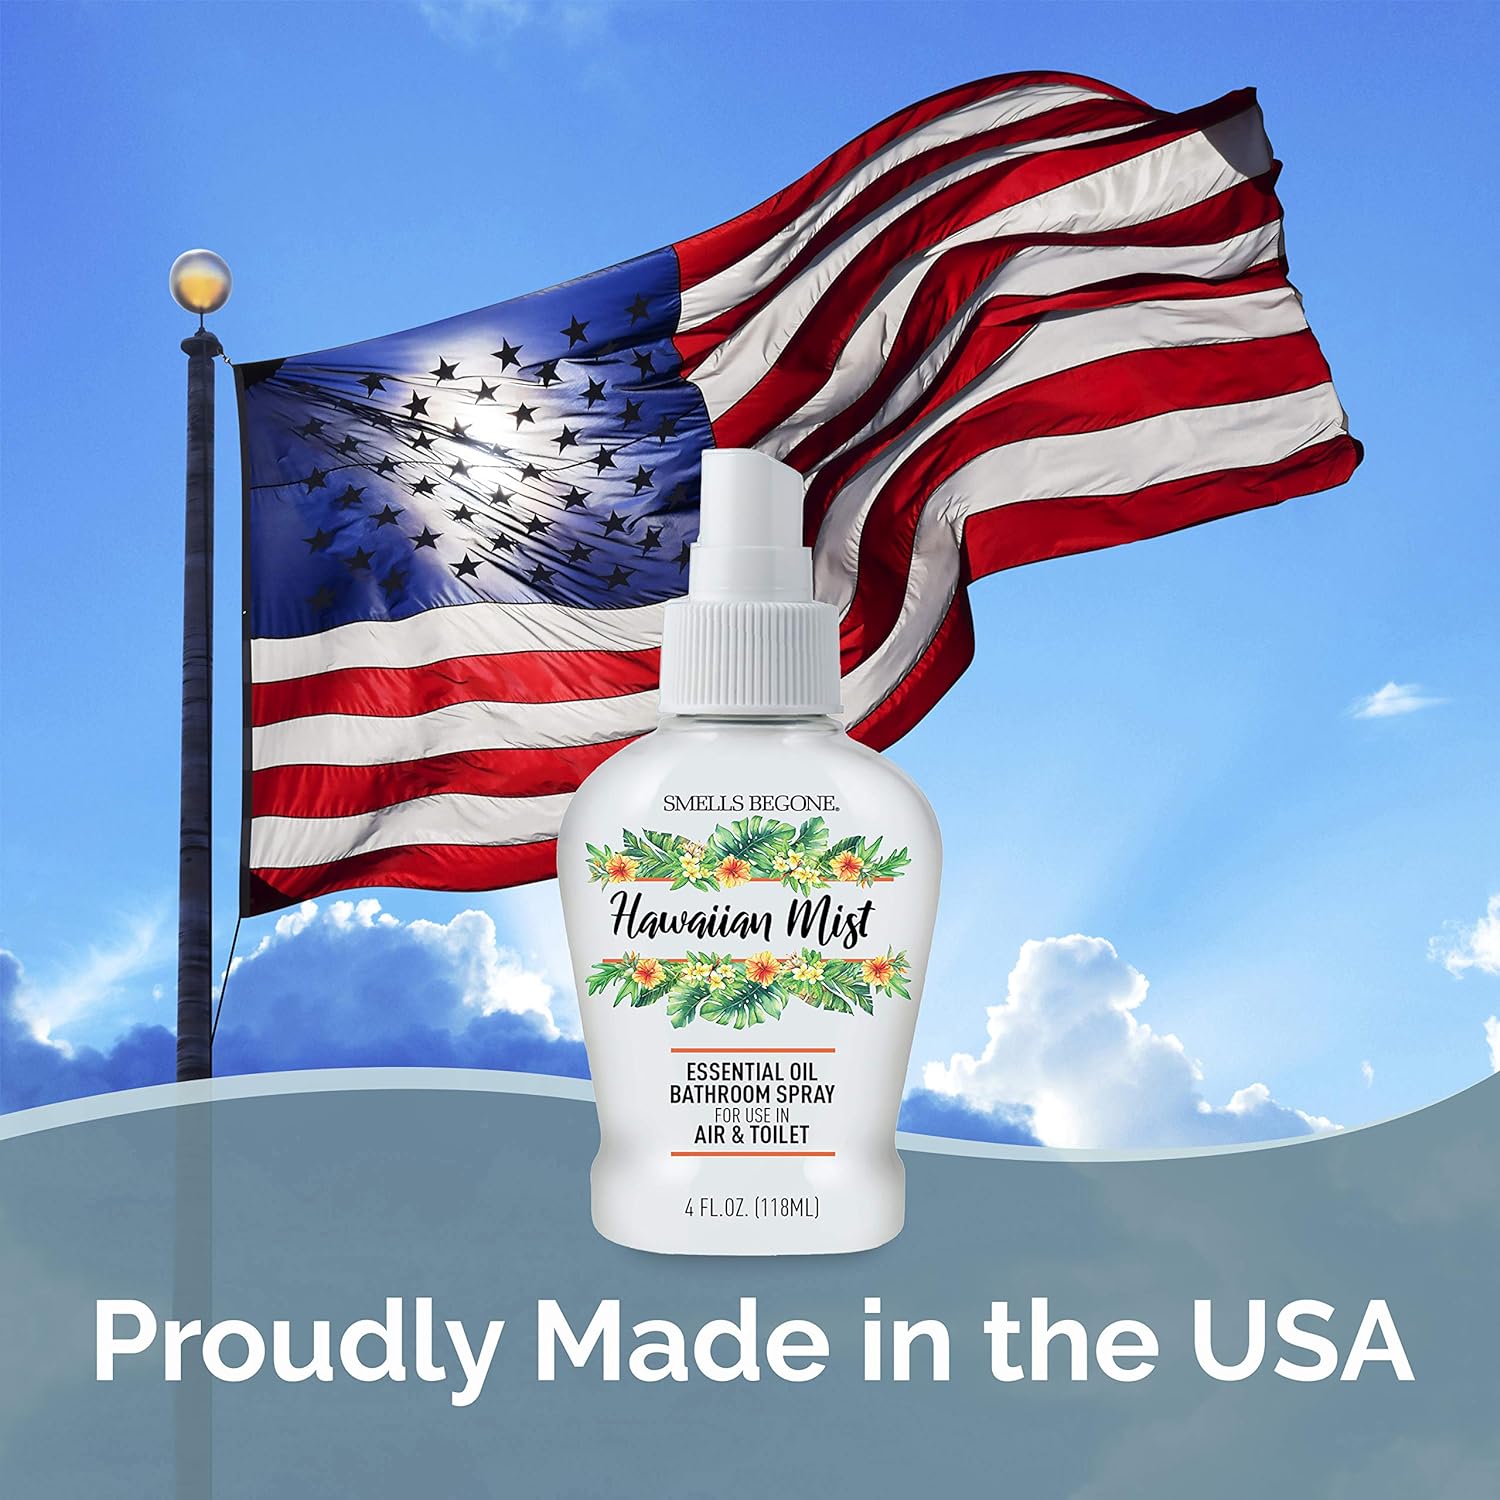 SMELLS BEGONE Essential Oil Air Freshener Bathroom Spray - Eliminates Bathroom & Toilet Odors - Made with Essential Oils - Hawaiian Mist Scent - 4 Ounces : Health & Household